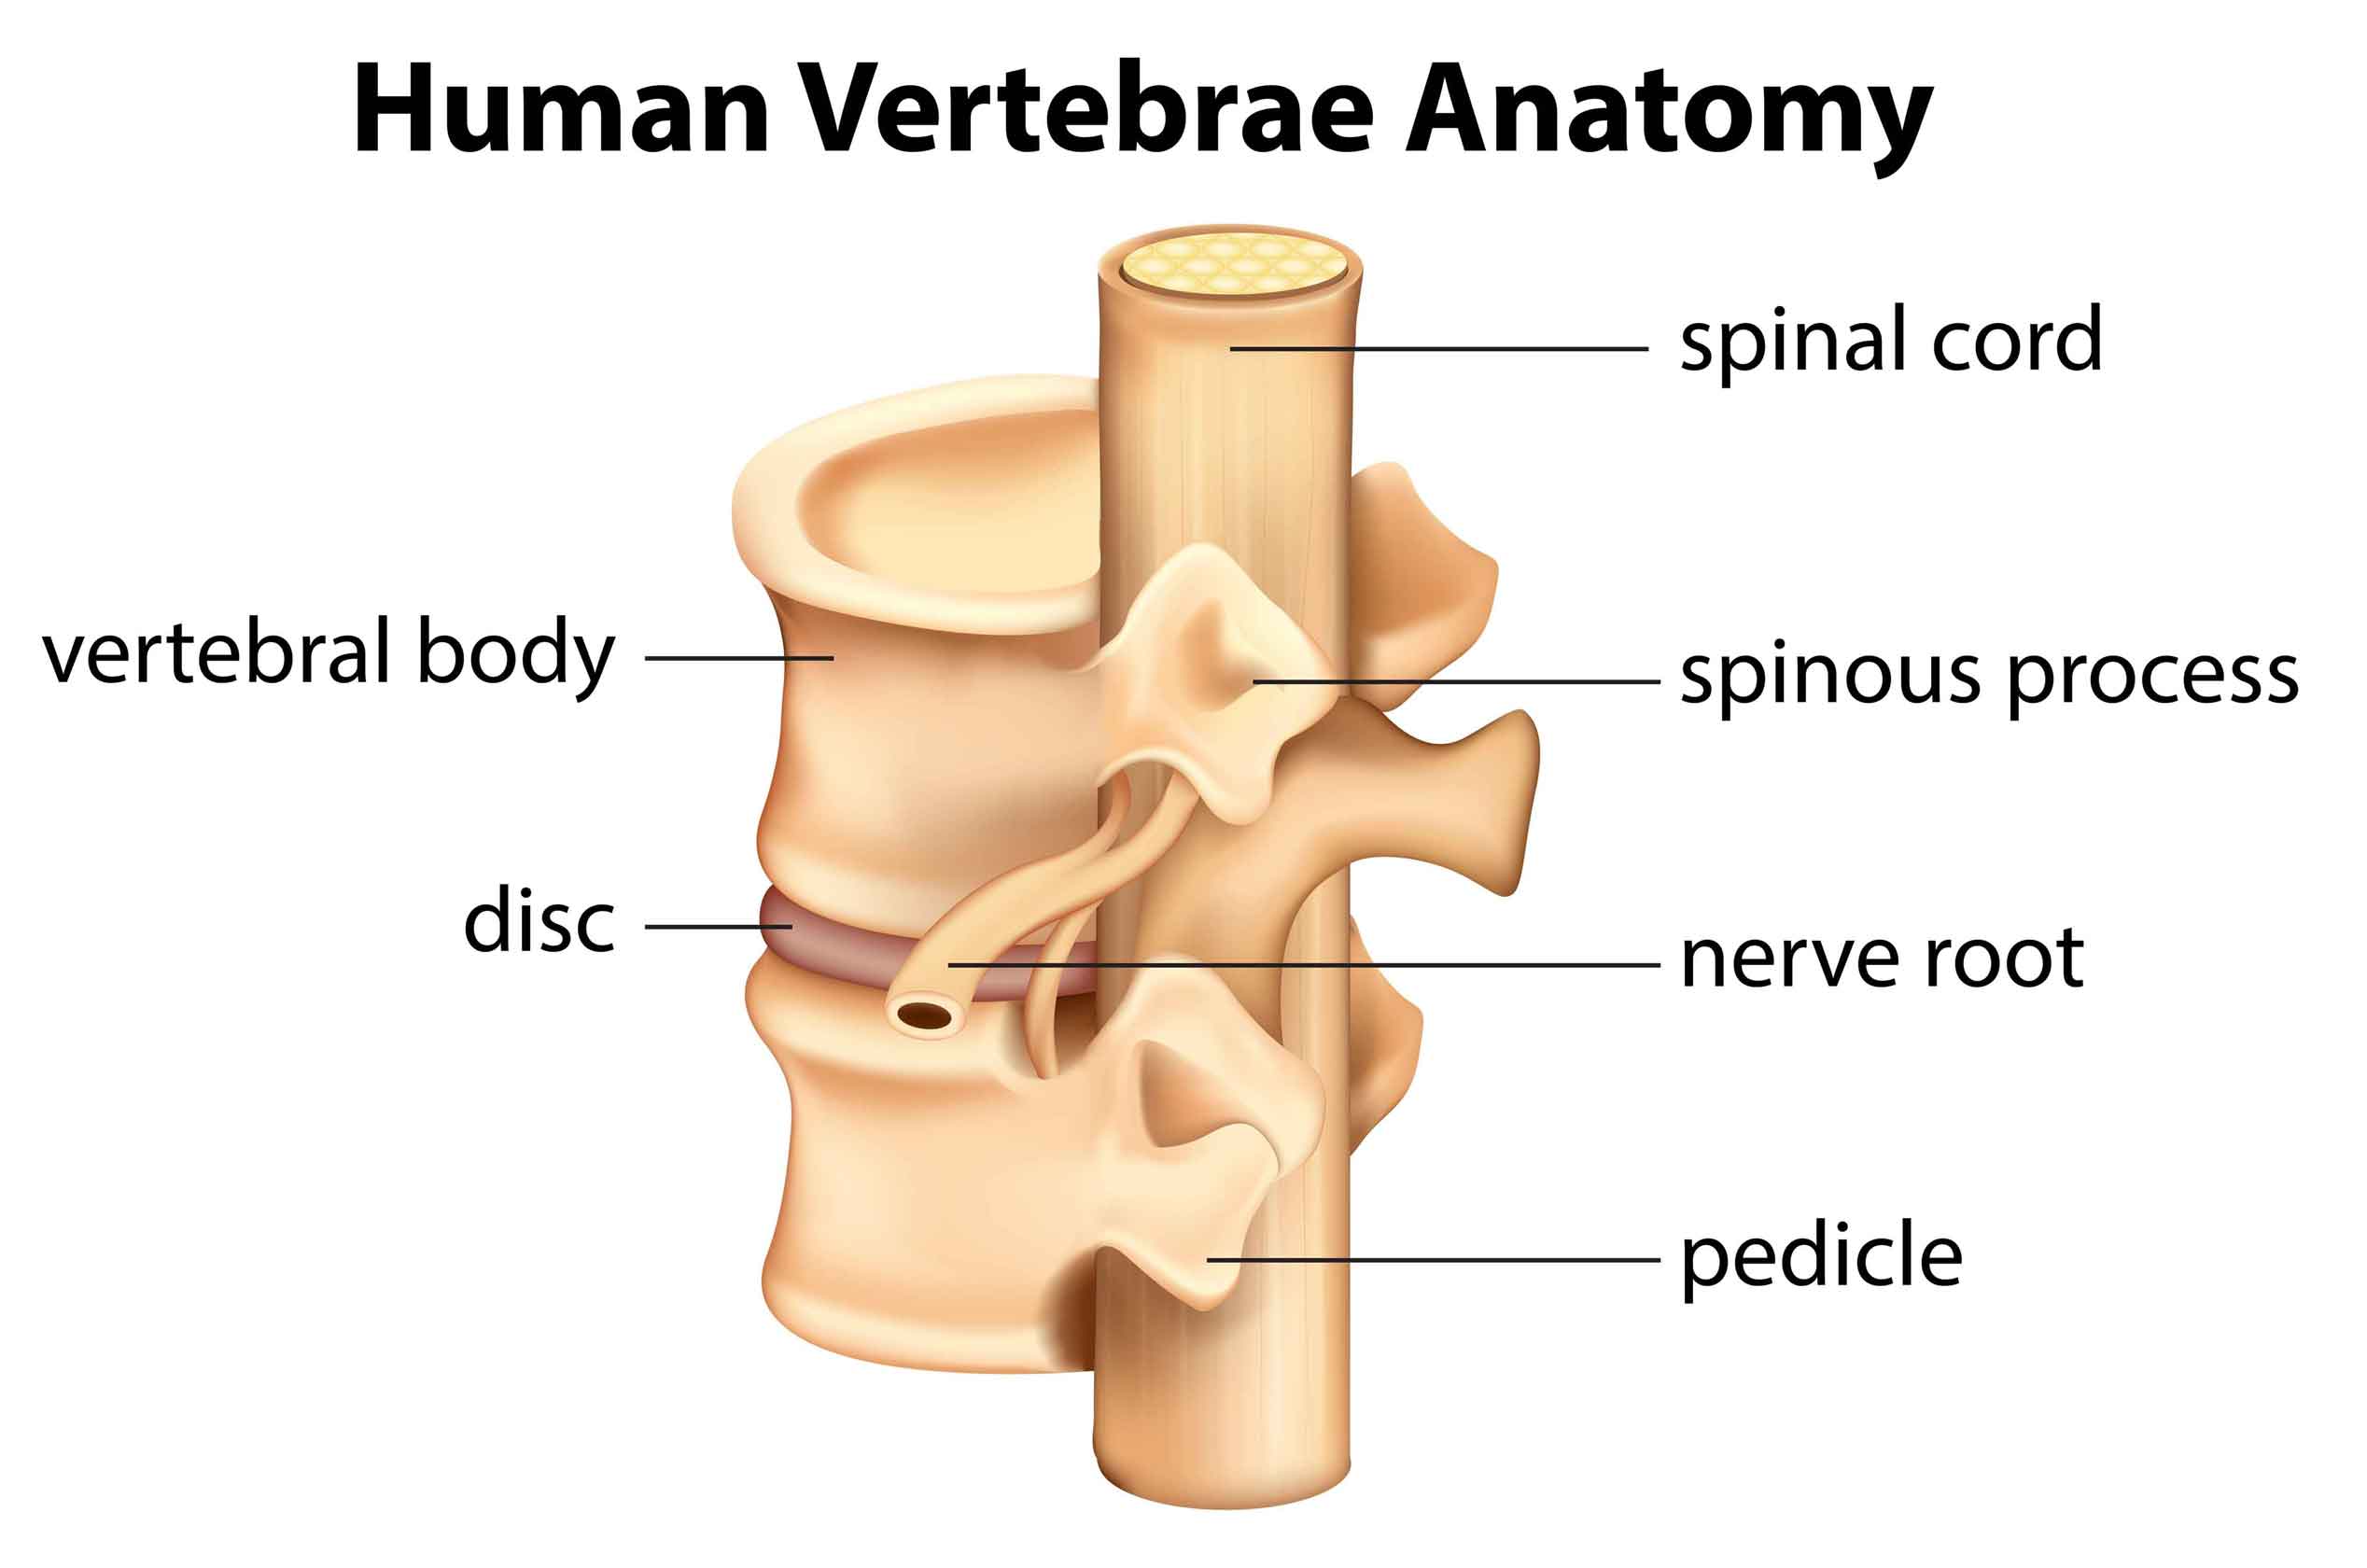 Spine cord anatomy